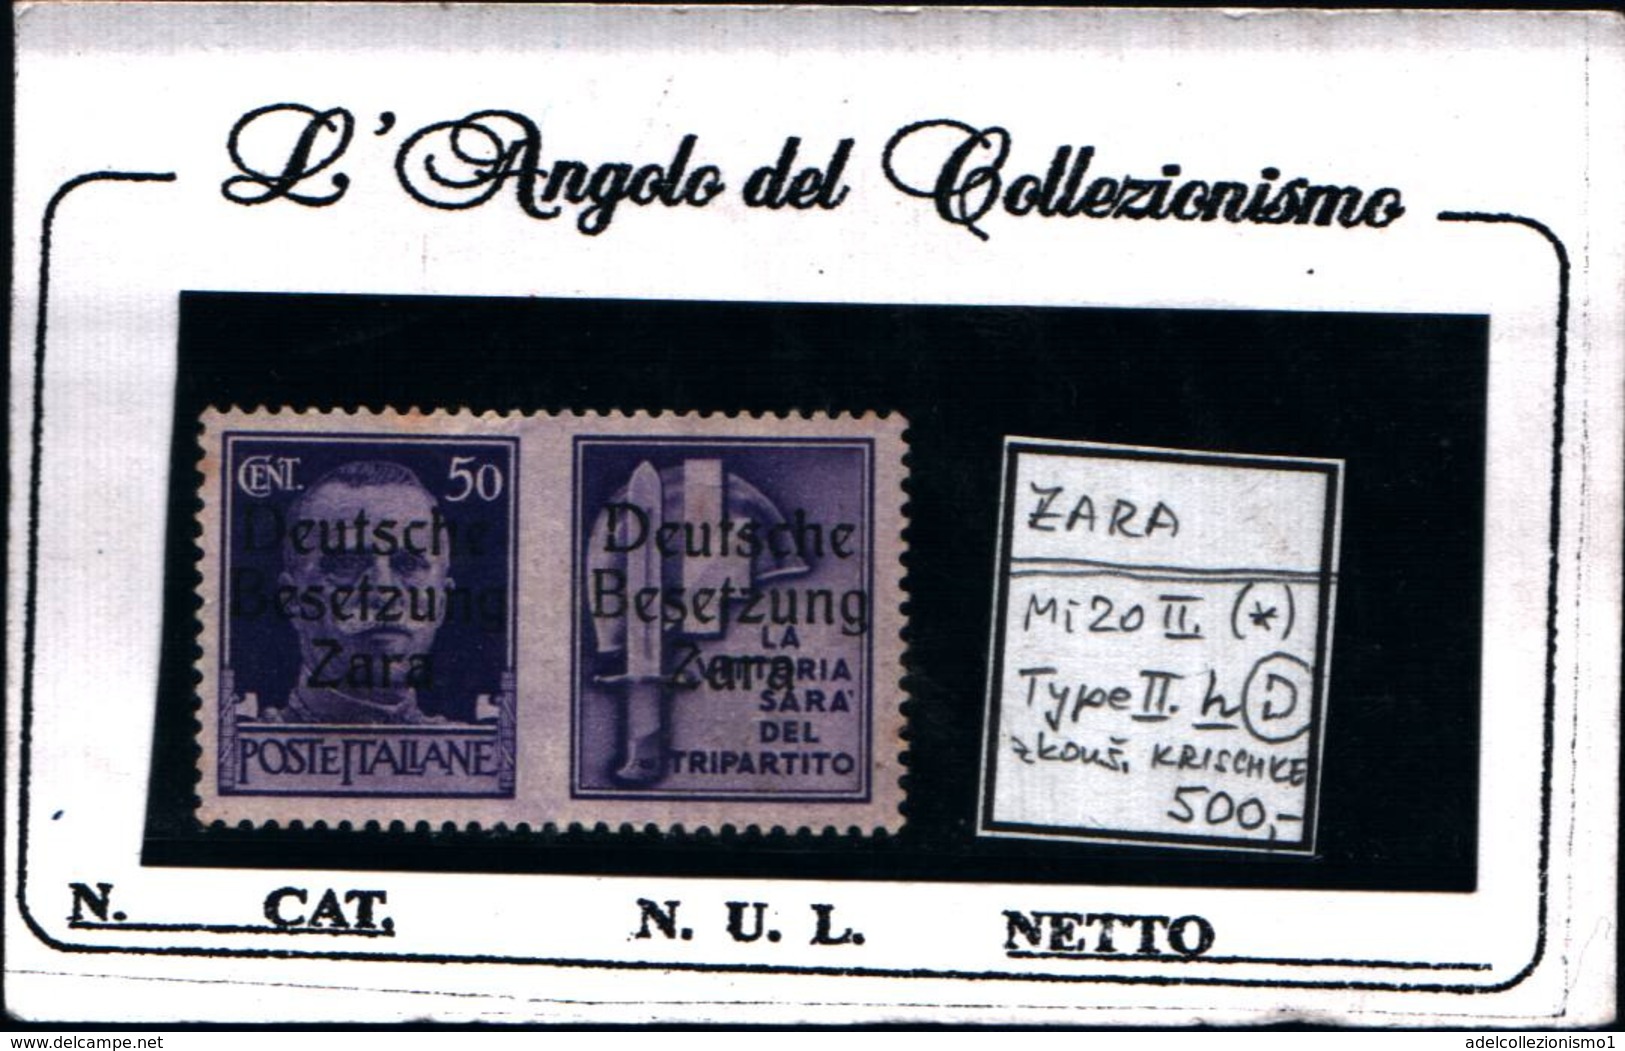 6940B) ITALIA- Zara, 50C. Serie Di Propaganda Sovrastampata - 9 Ottobre 1943-MI 20 II-TYPE II H -FIRMATO SENZA GOMMA - German Occ.: Zara